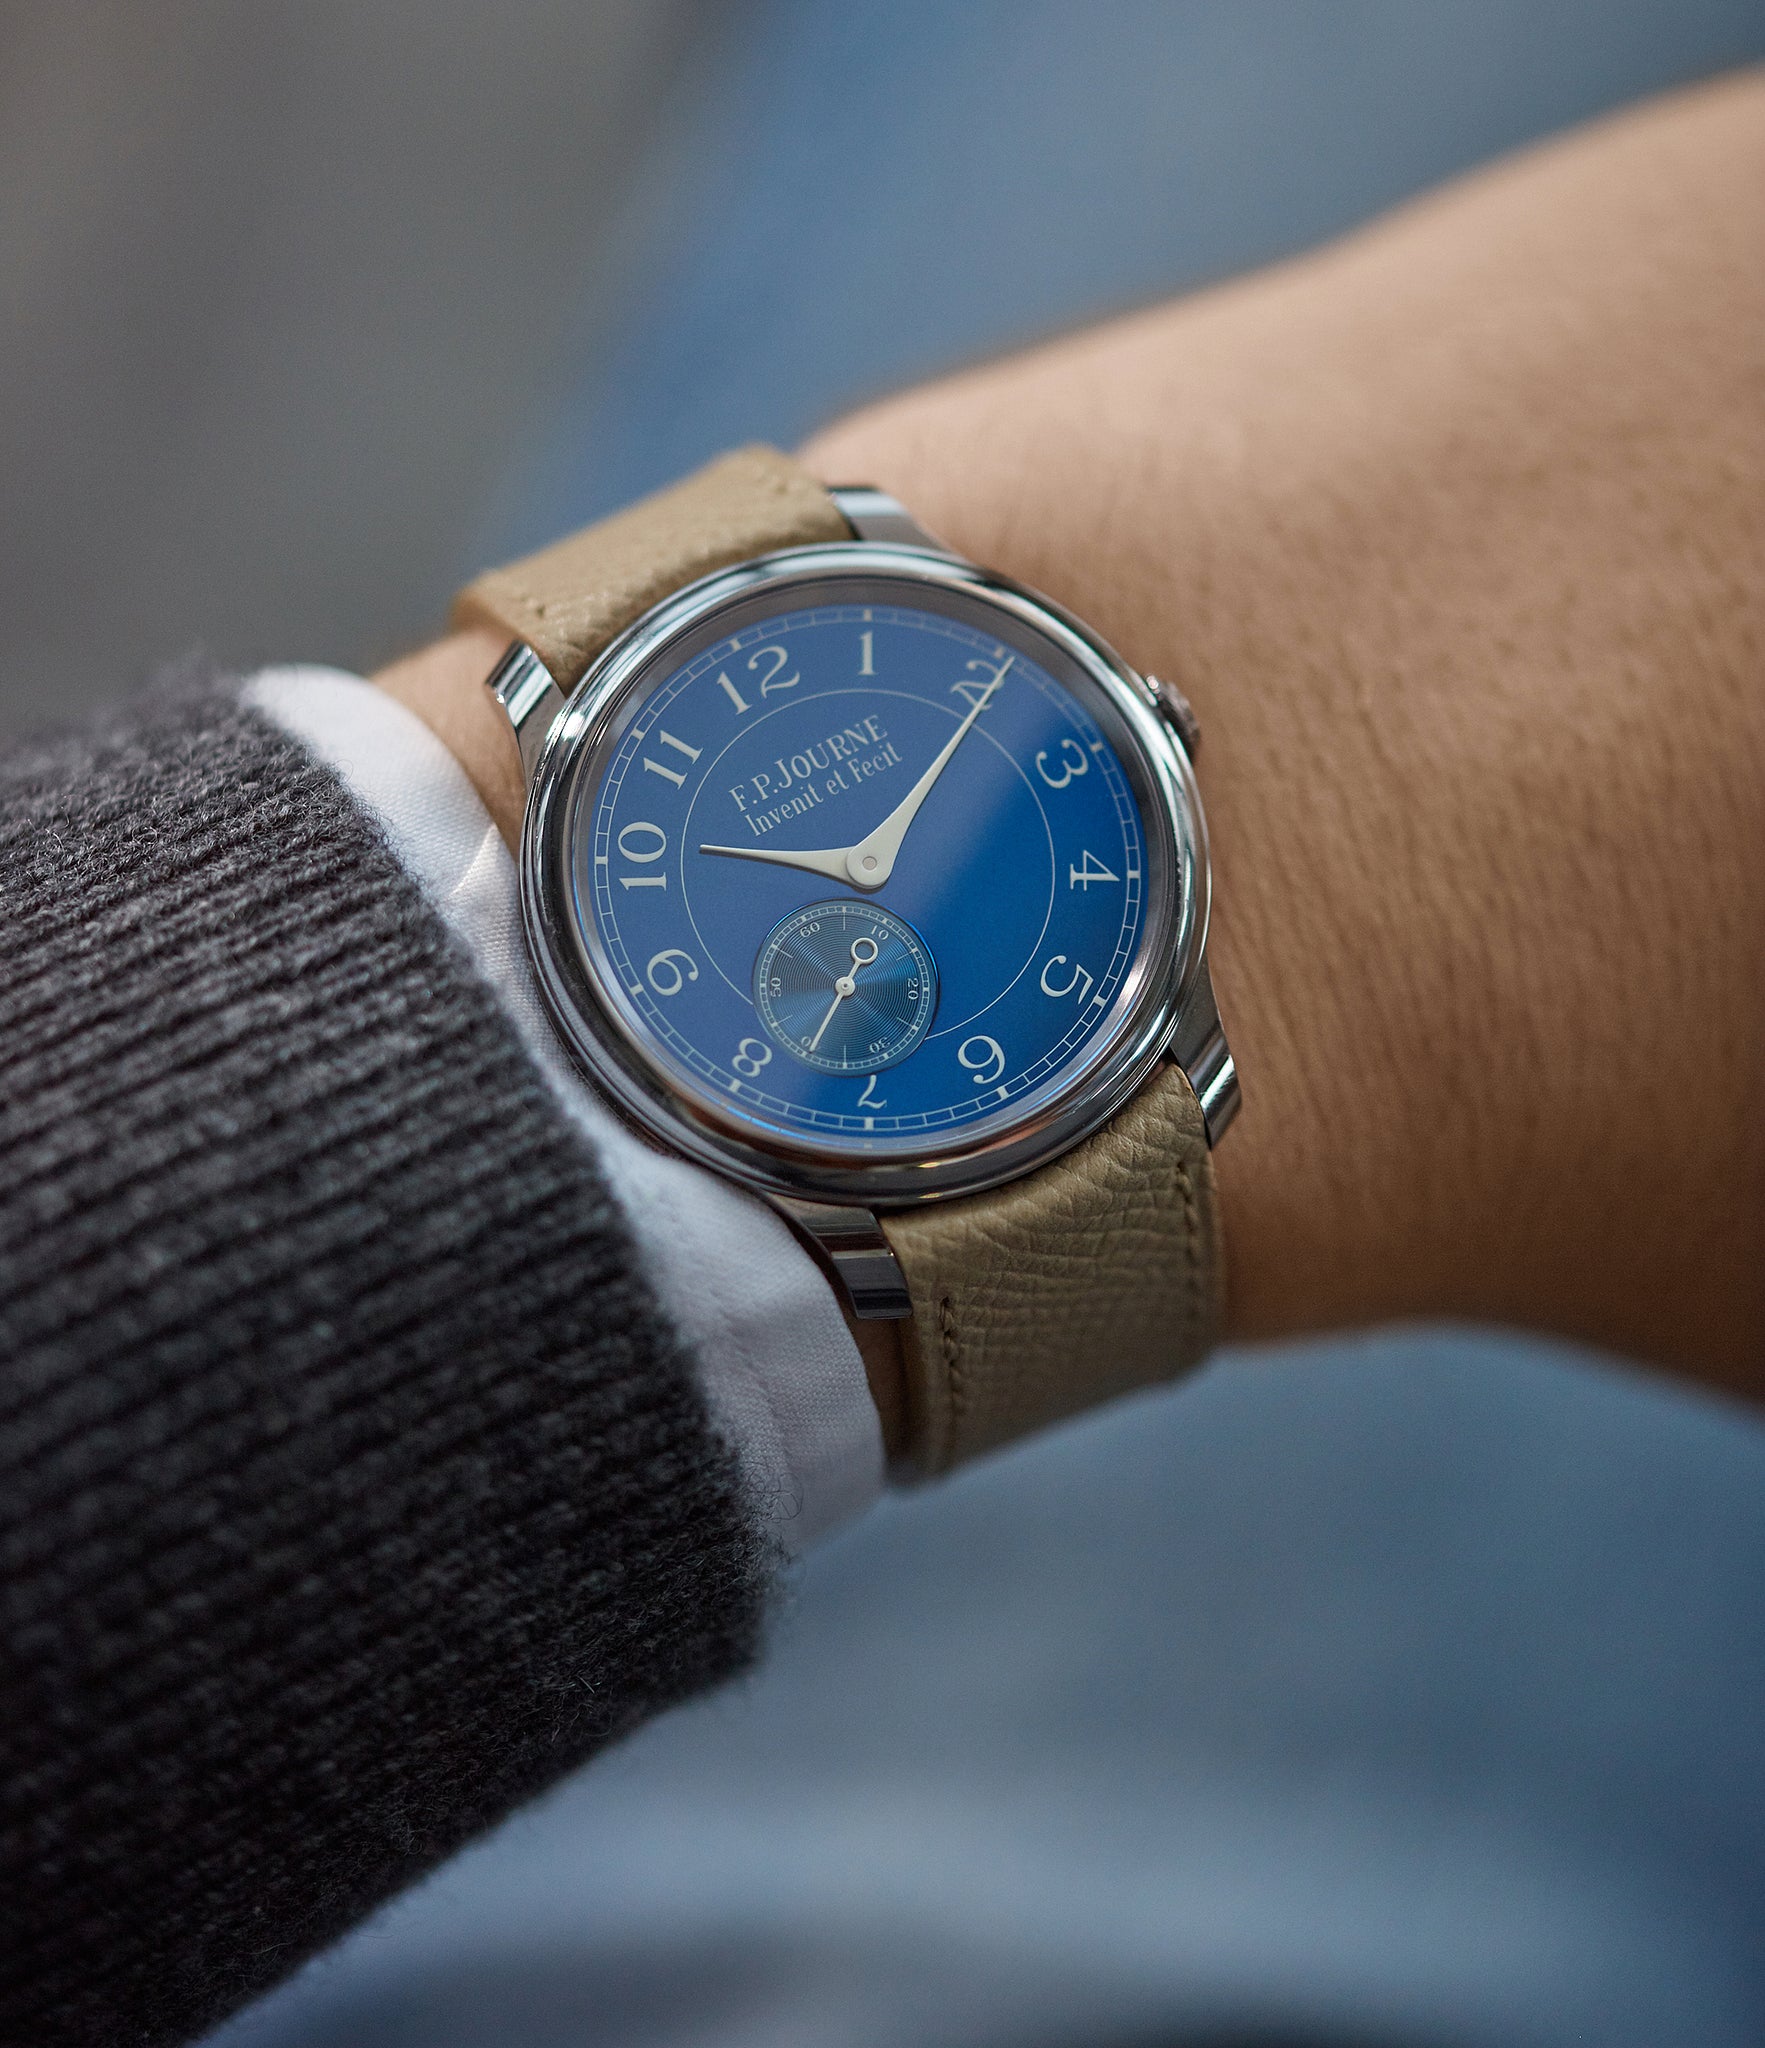 rare F. P. Journe Chronometre Bleu tantalum blue dial dress watch independent watchmaker for sale online at A Collected Man London